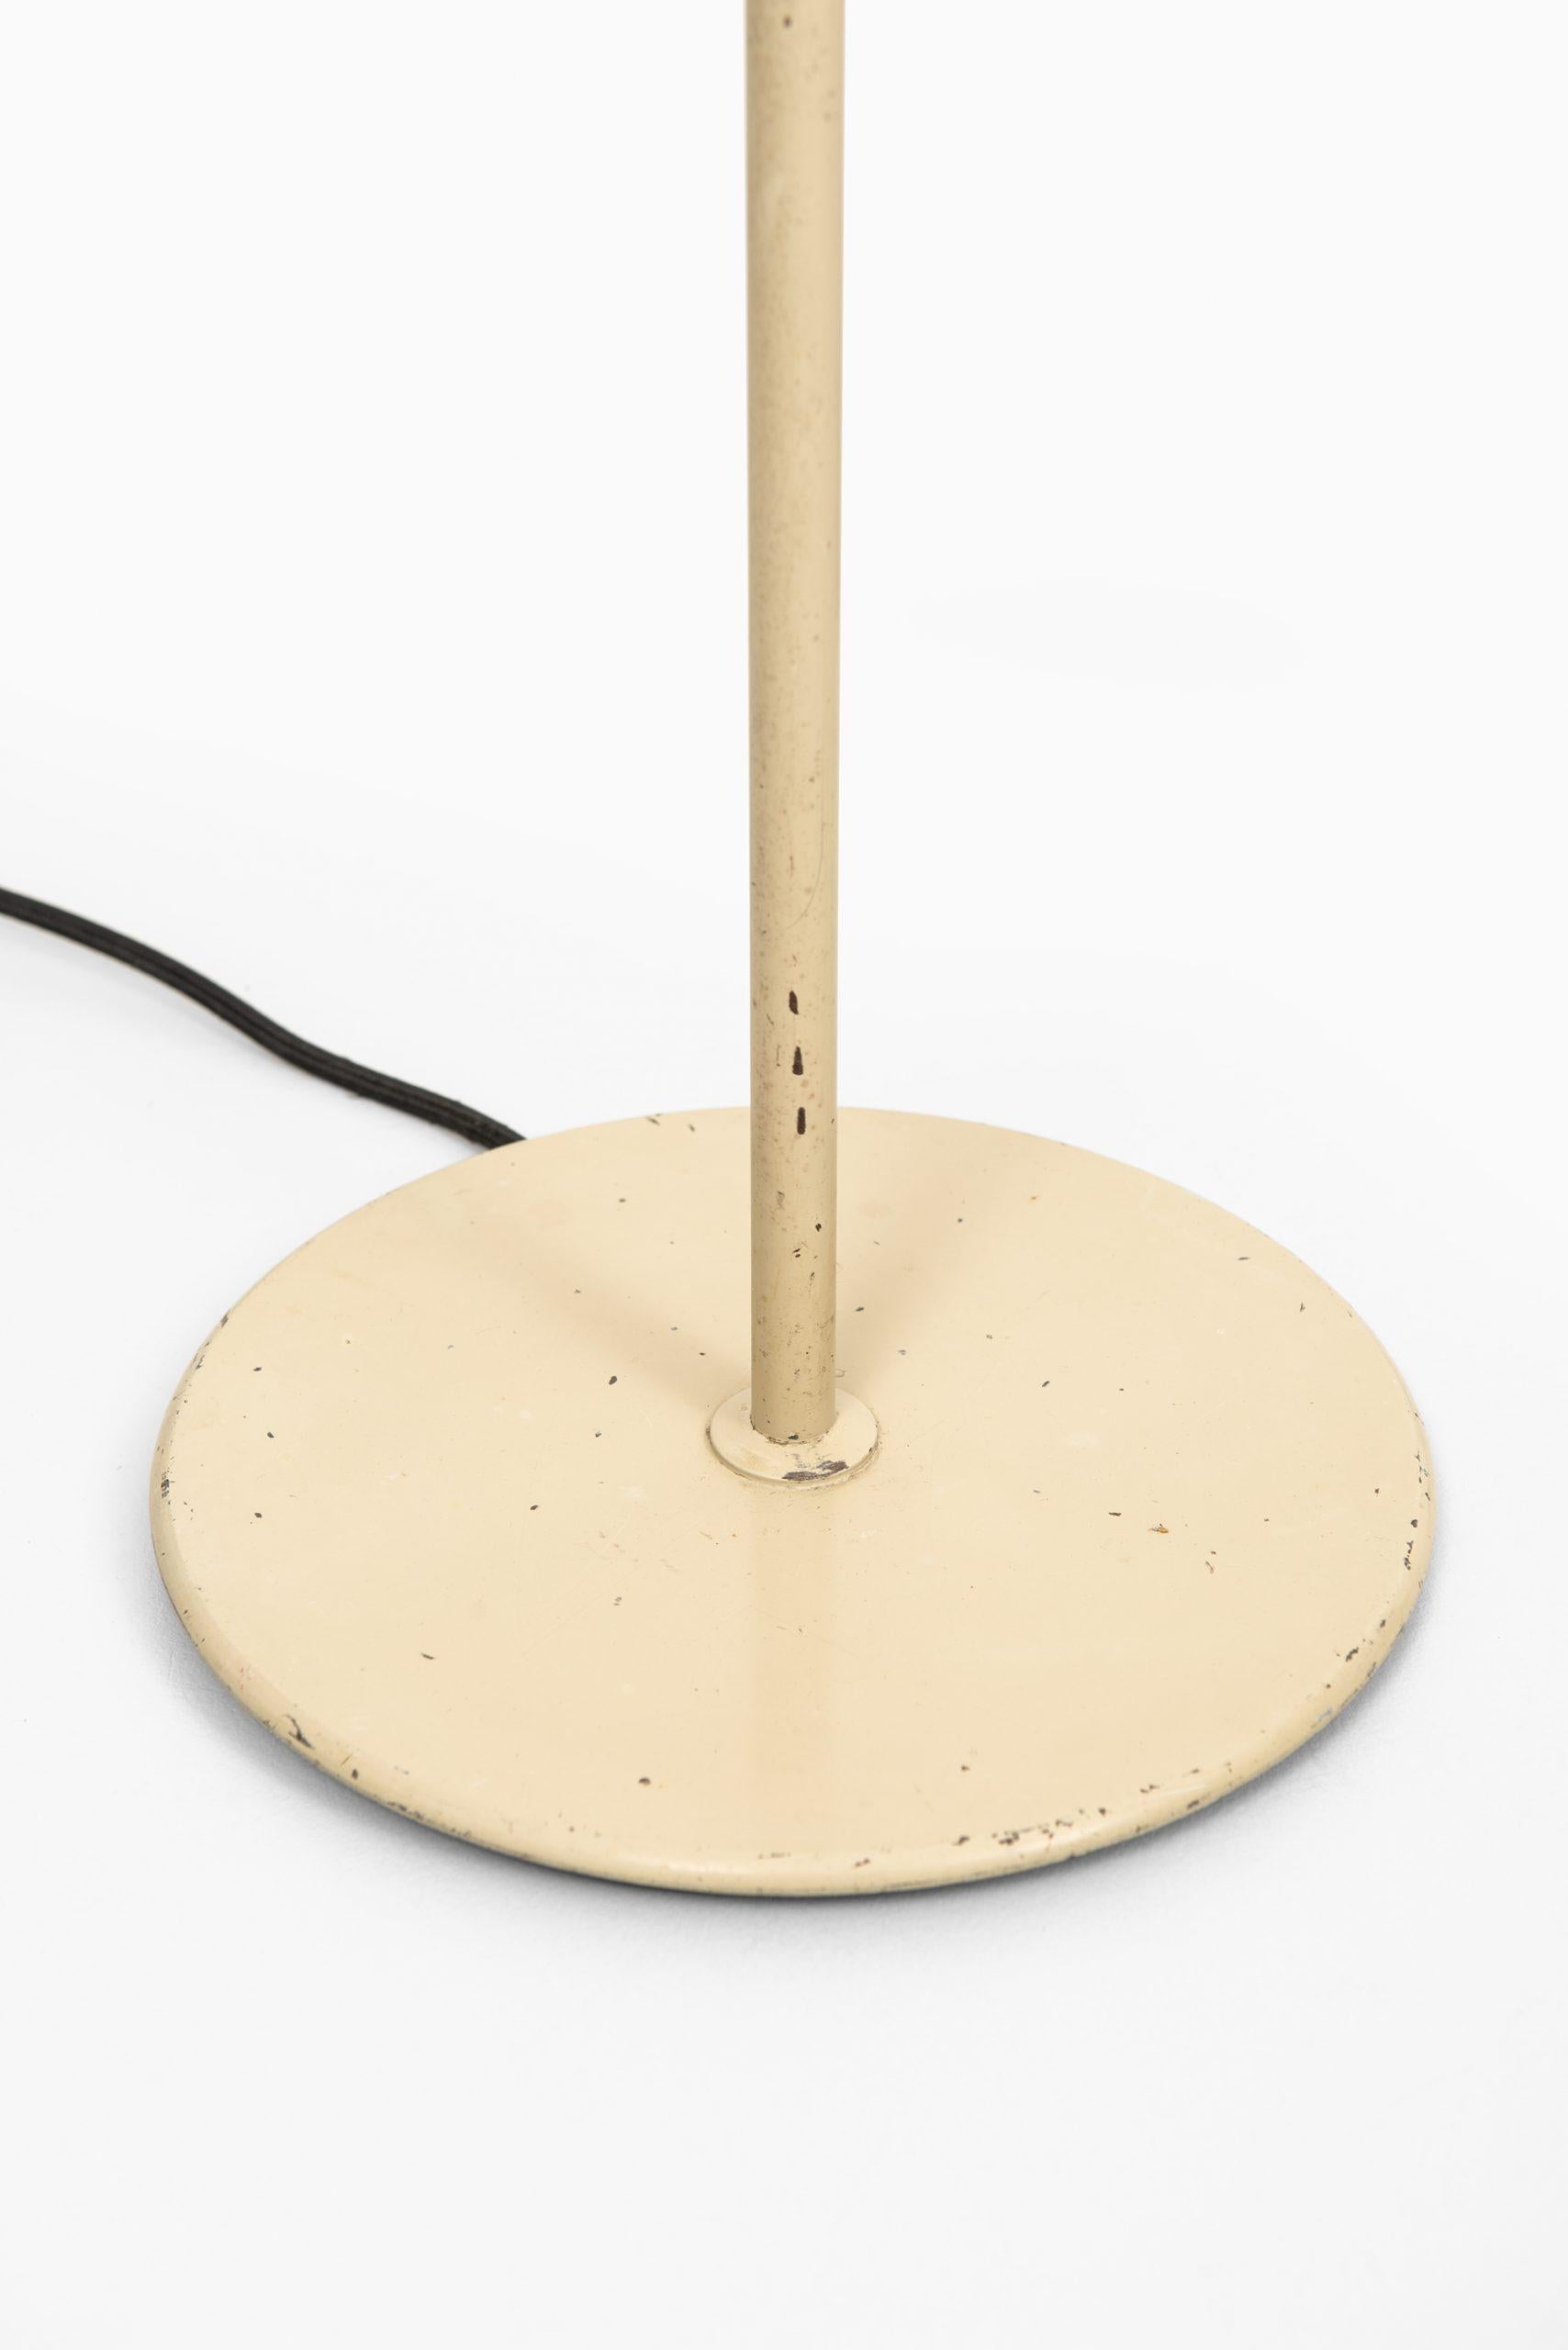 Scandinavian Modern Floor Lamps / Uplights Model G-07 Produced by Bergbom in Sweden For Sale